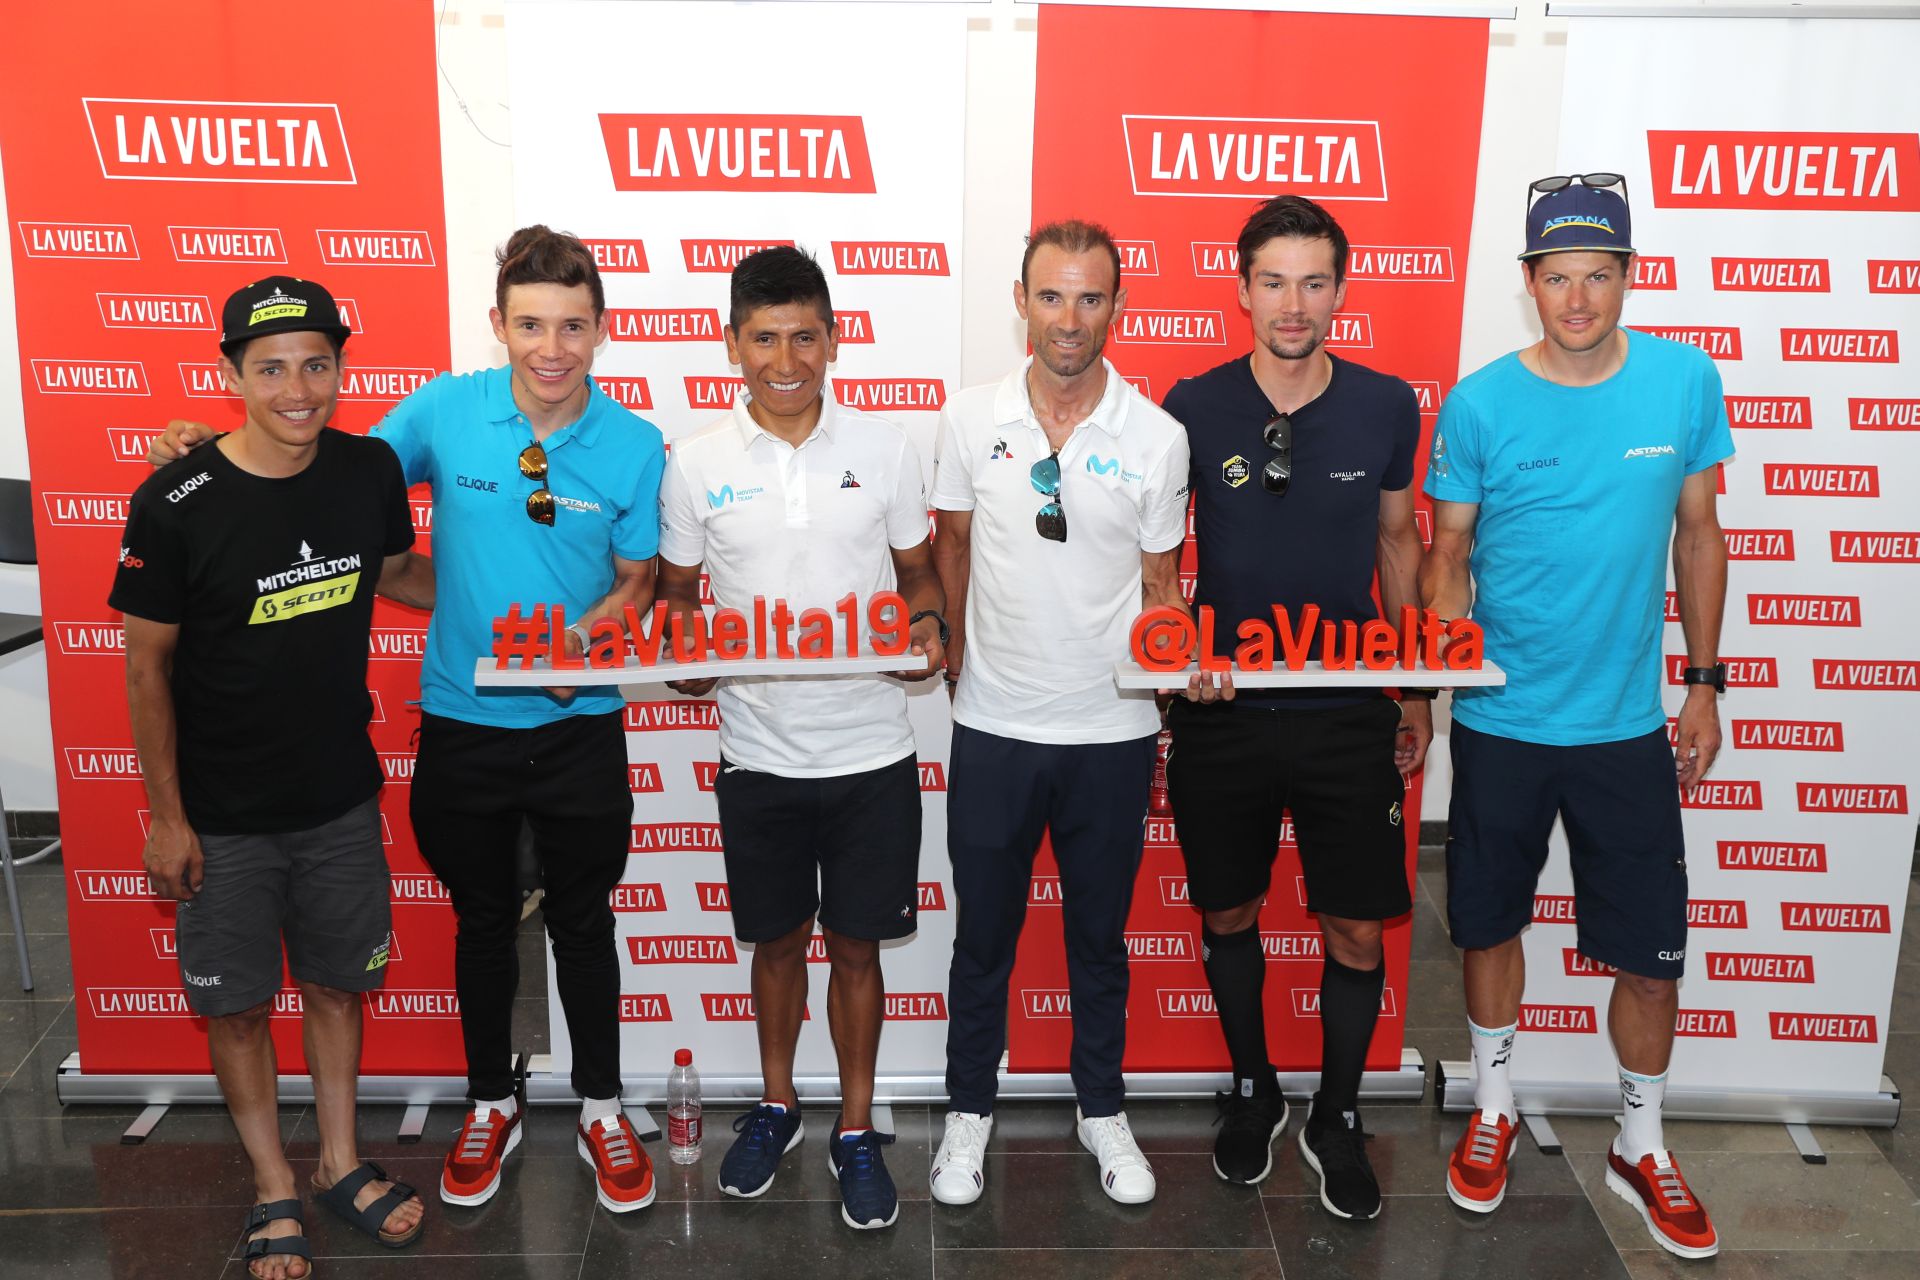 Lista startowa Vuelta a Espana 2019